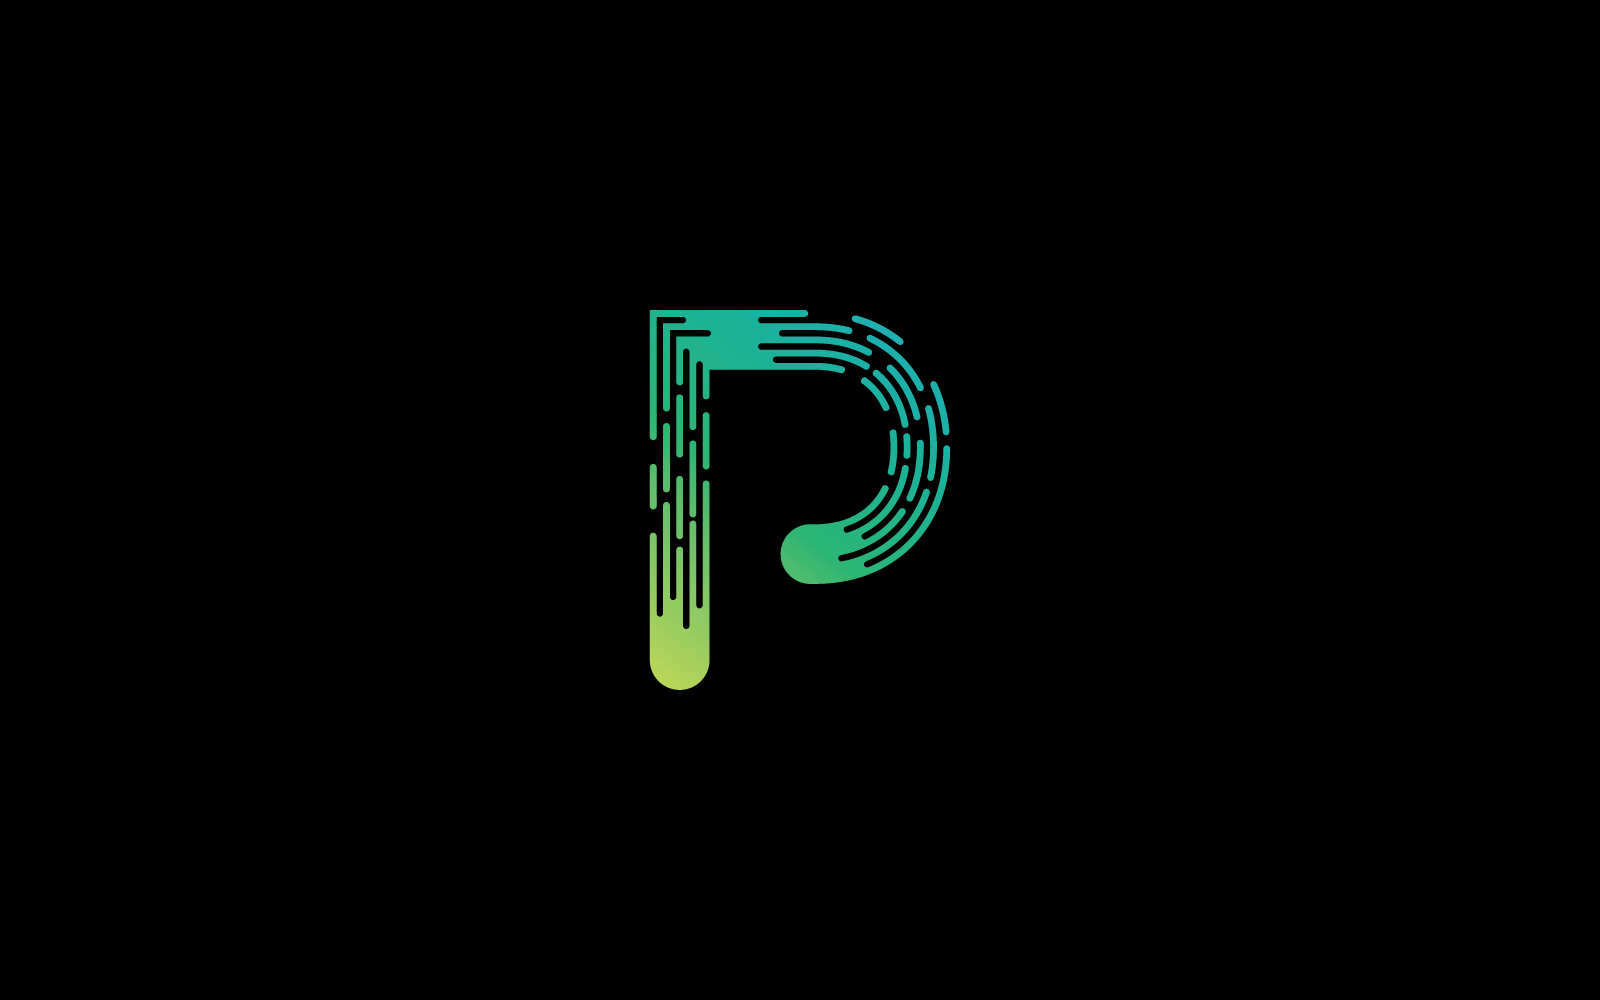 Moderne P Initiële letter alfabet lettertype logo sjabloon